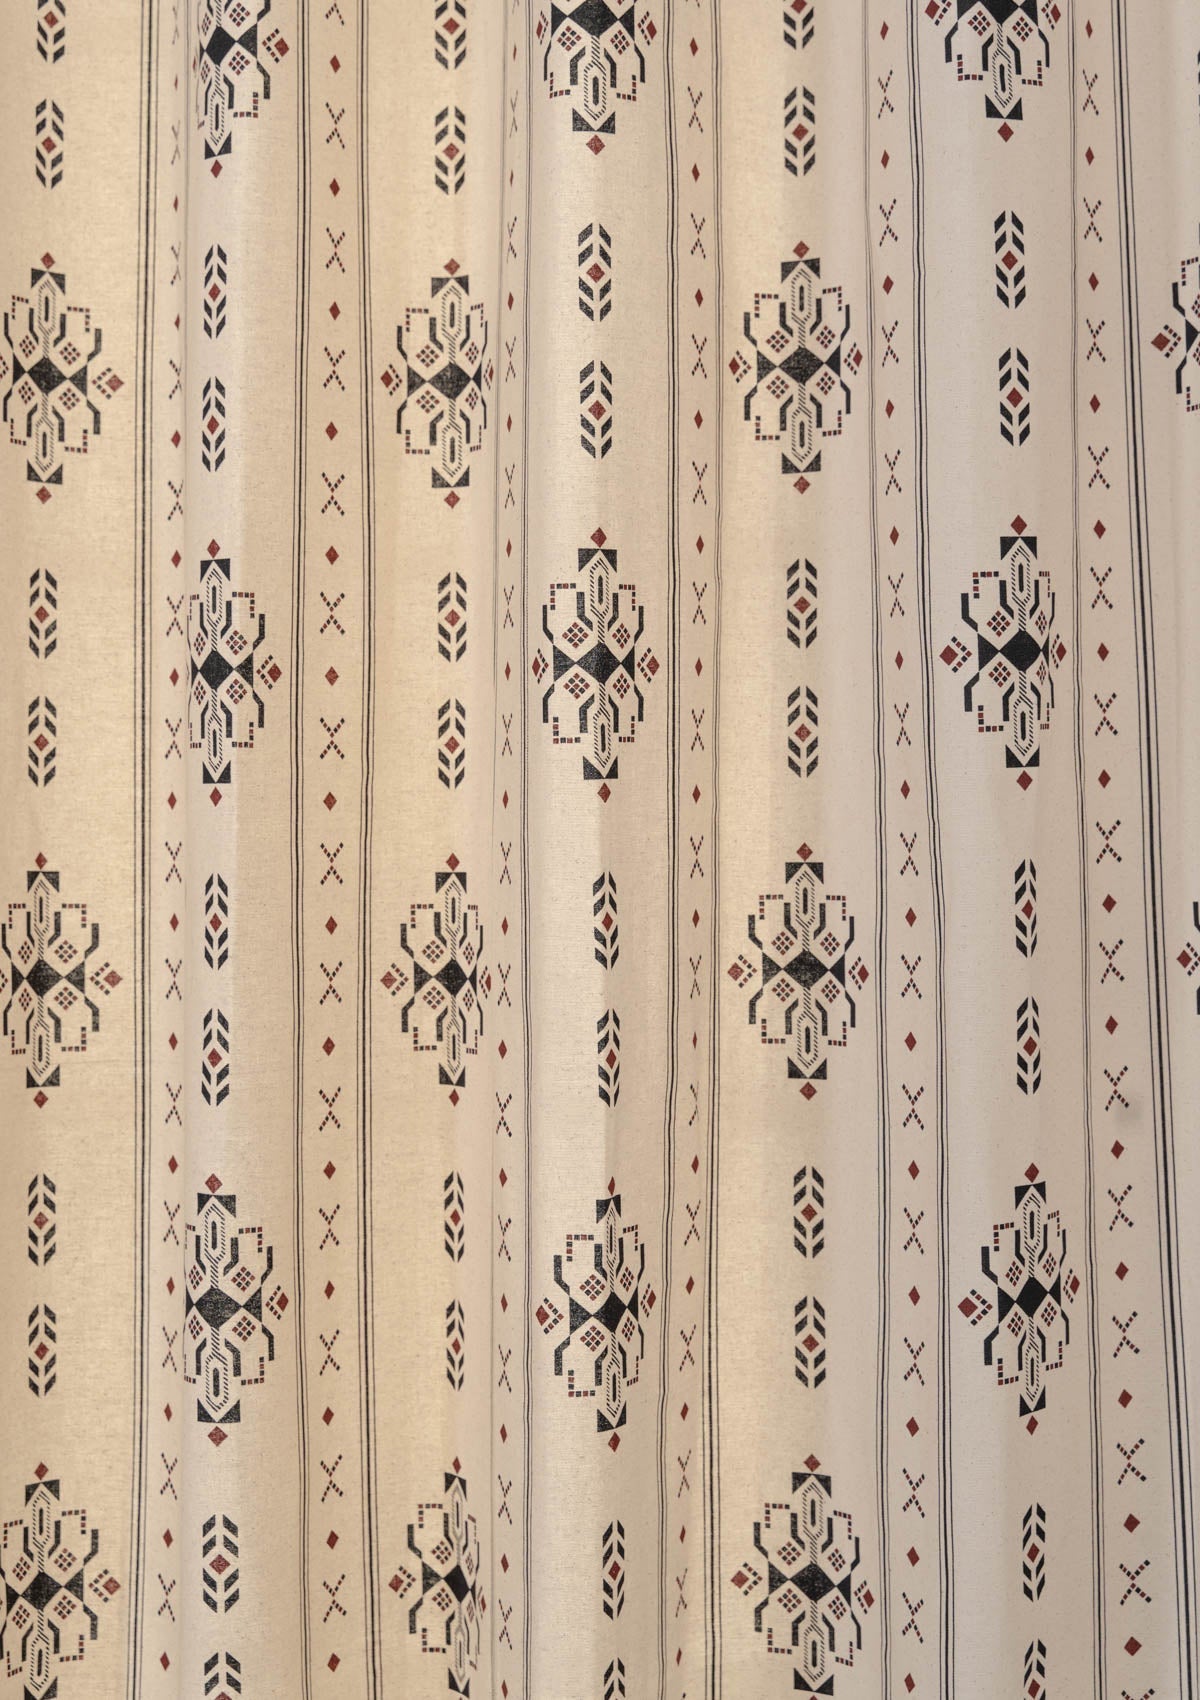 Gypsy 100% cotton geometric customisable curtain for living room - Room darkening - Black